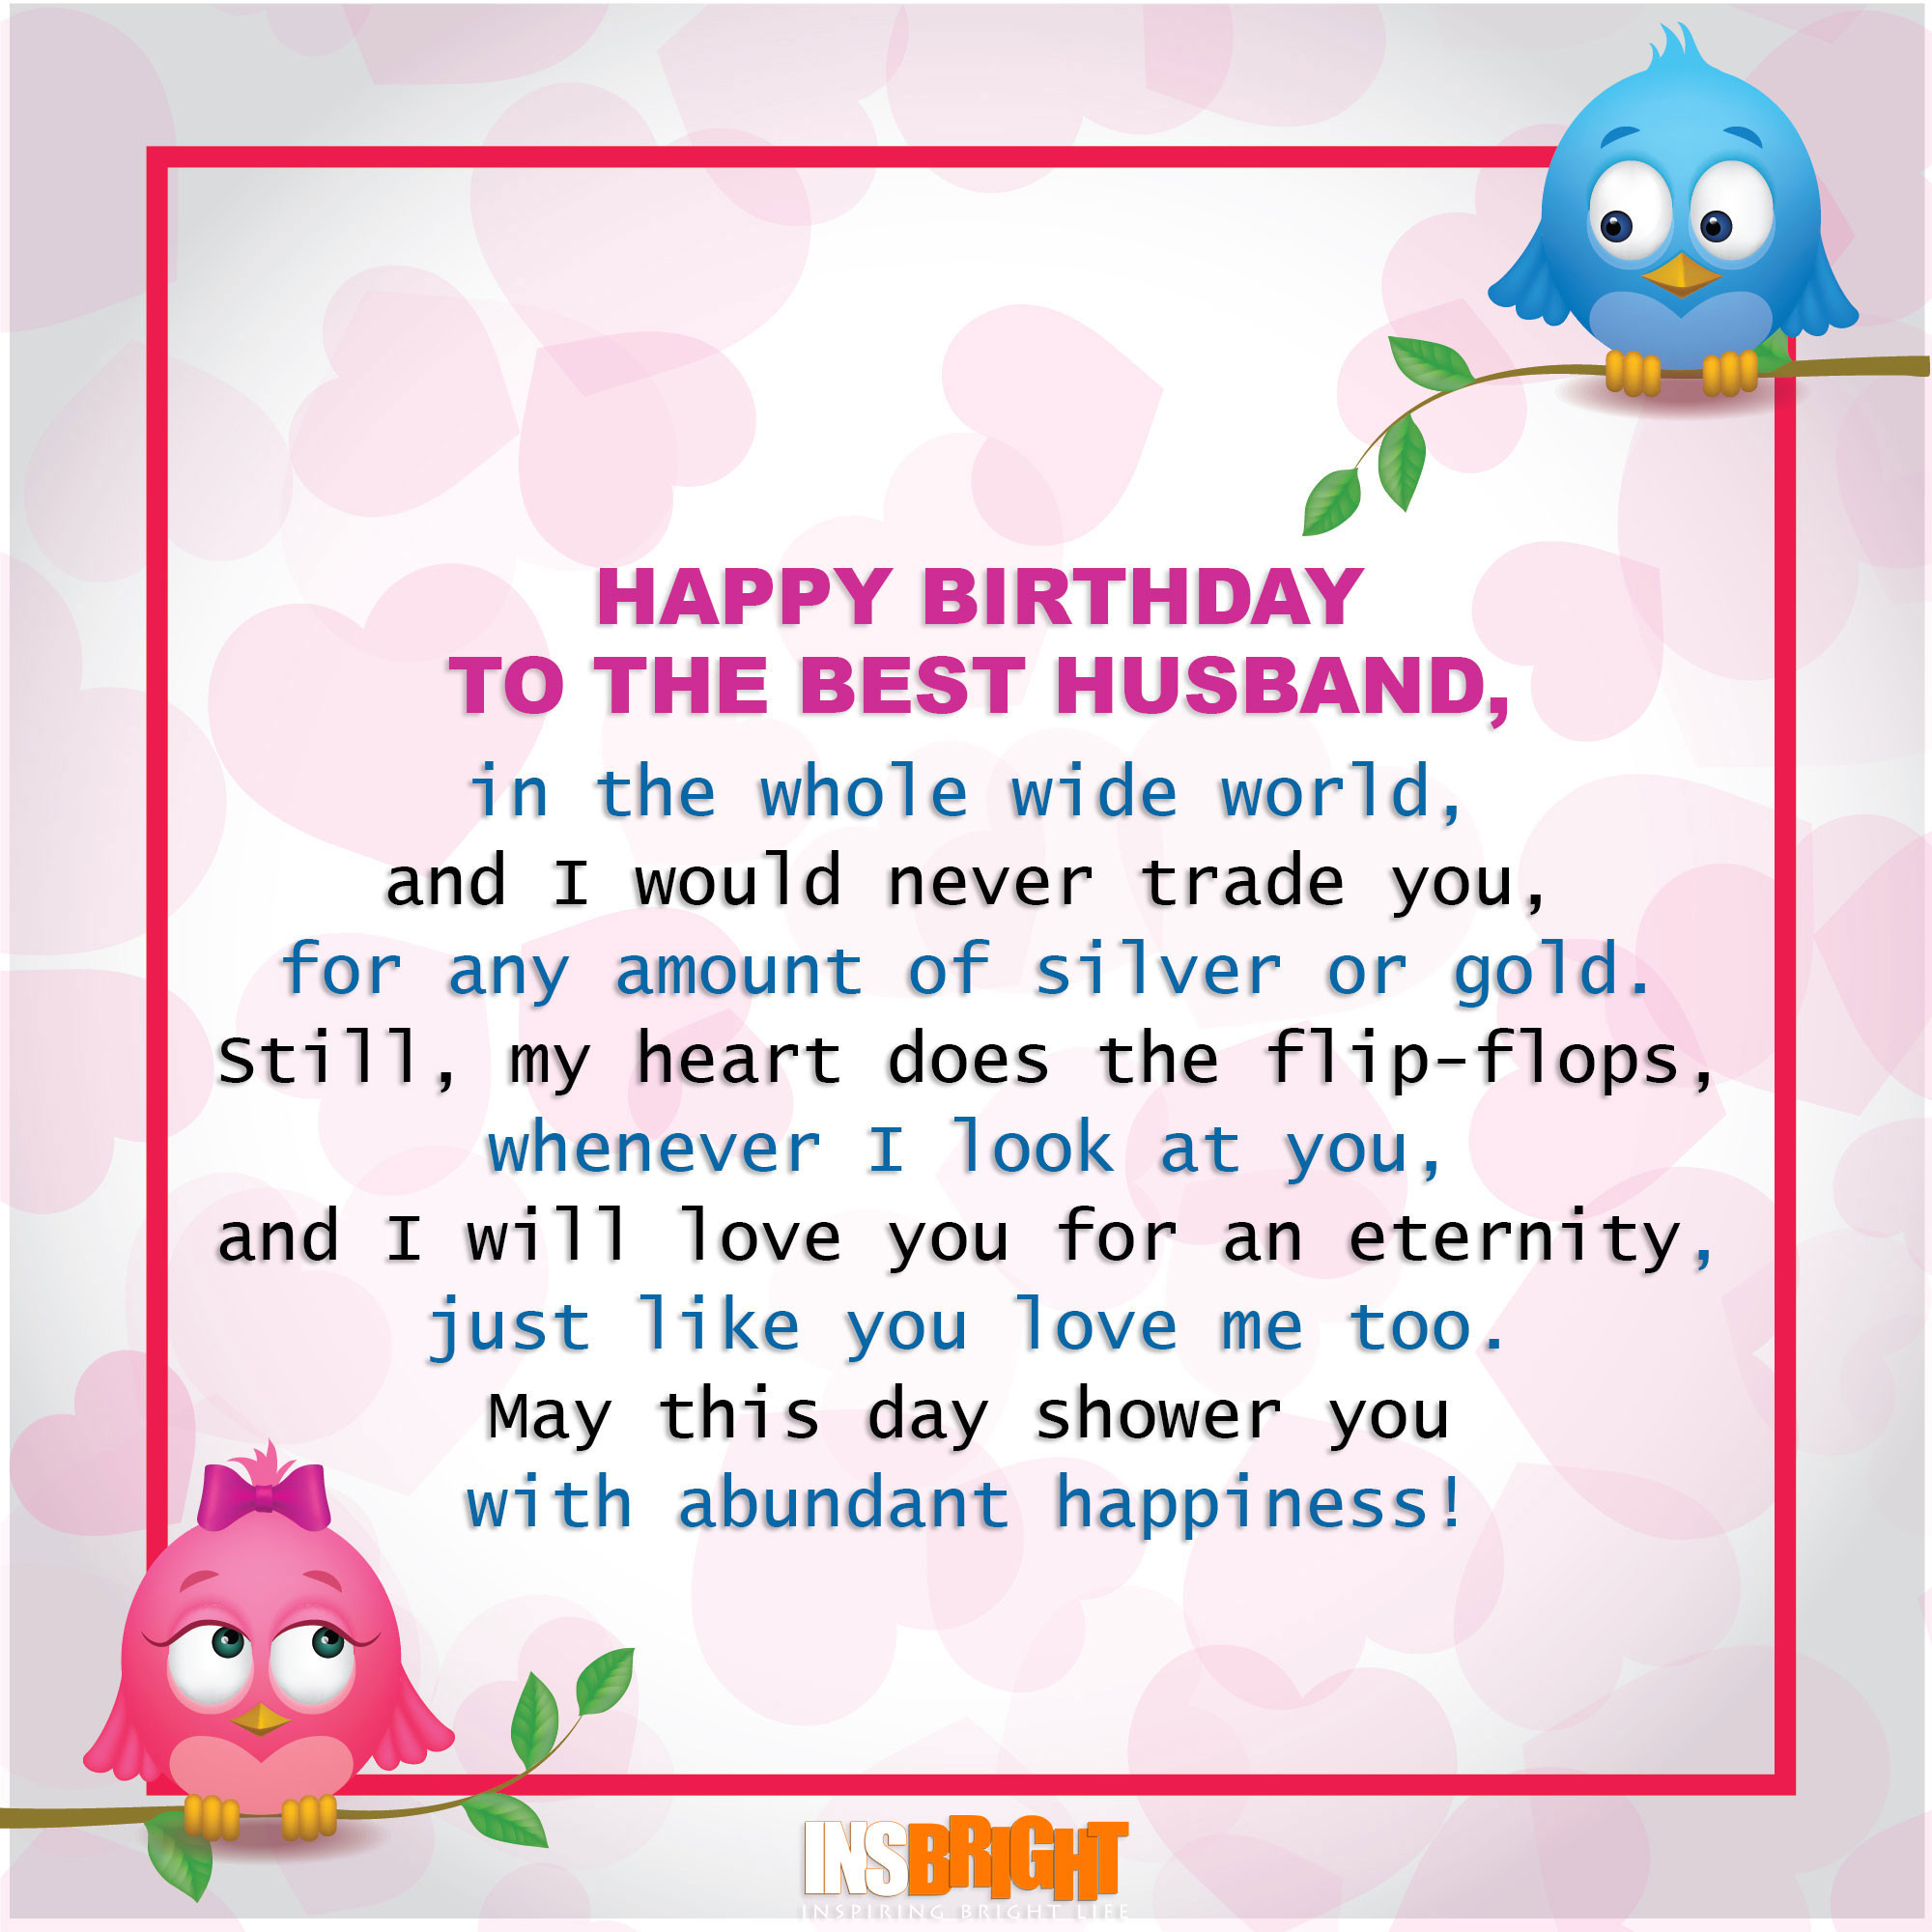 Happy Birthday Quotes To My Husband
 Romantic Happy Birthday Poems For Husband From Wife